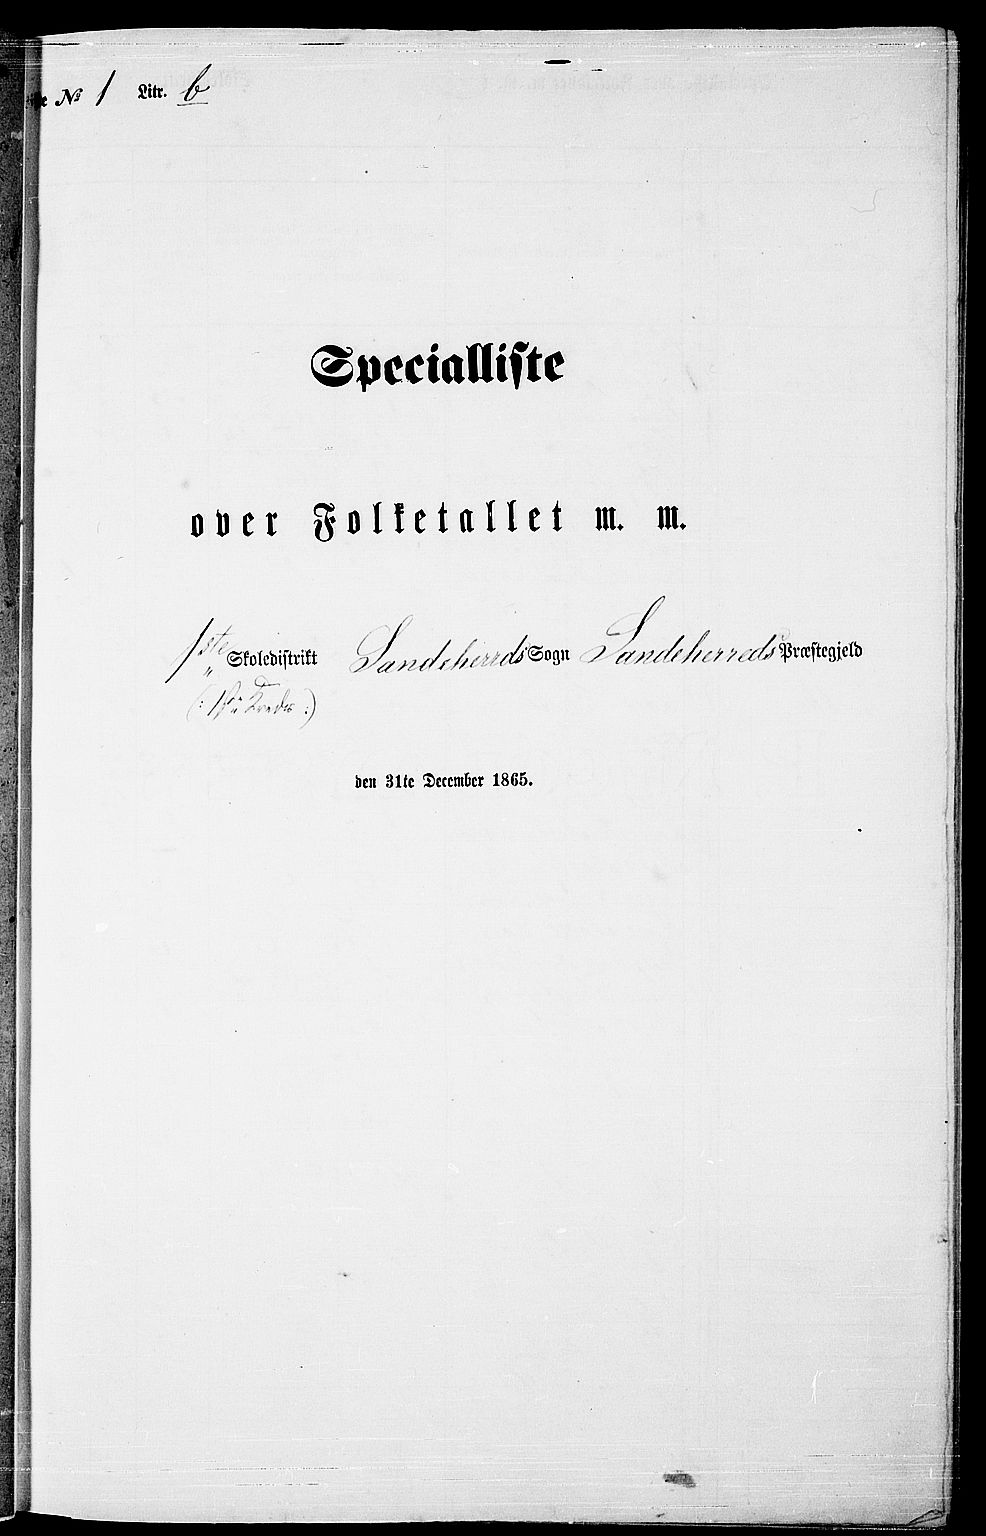 RA, Folketelling 1865 for 0724L Sandeherred prestegjeld, Sandeherred sokn, 1865, s. 22